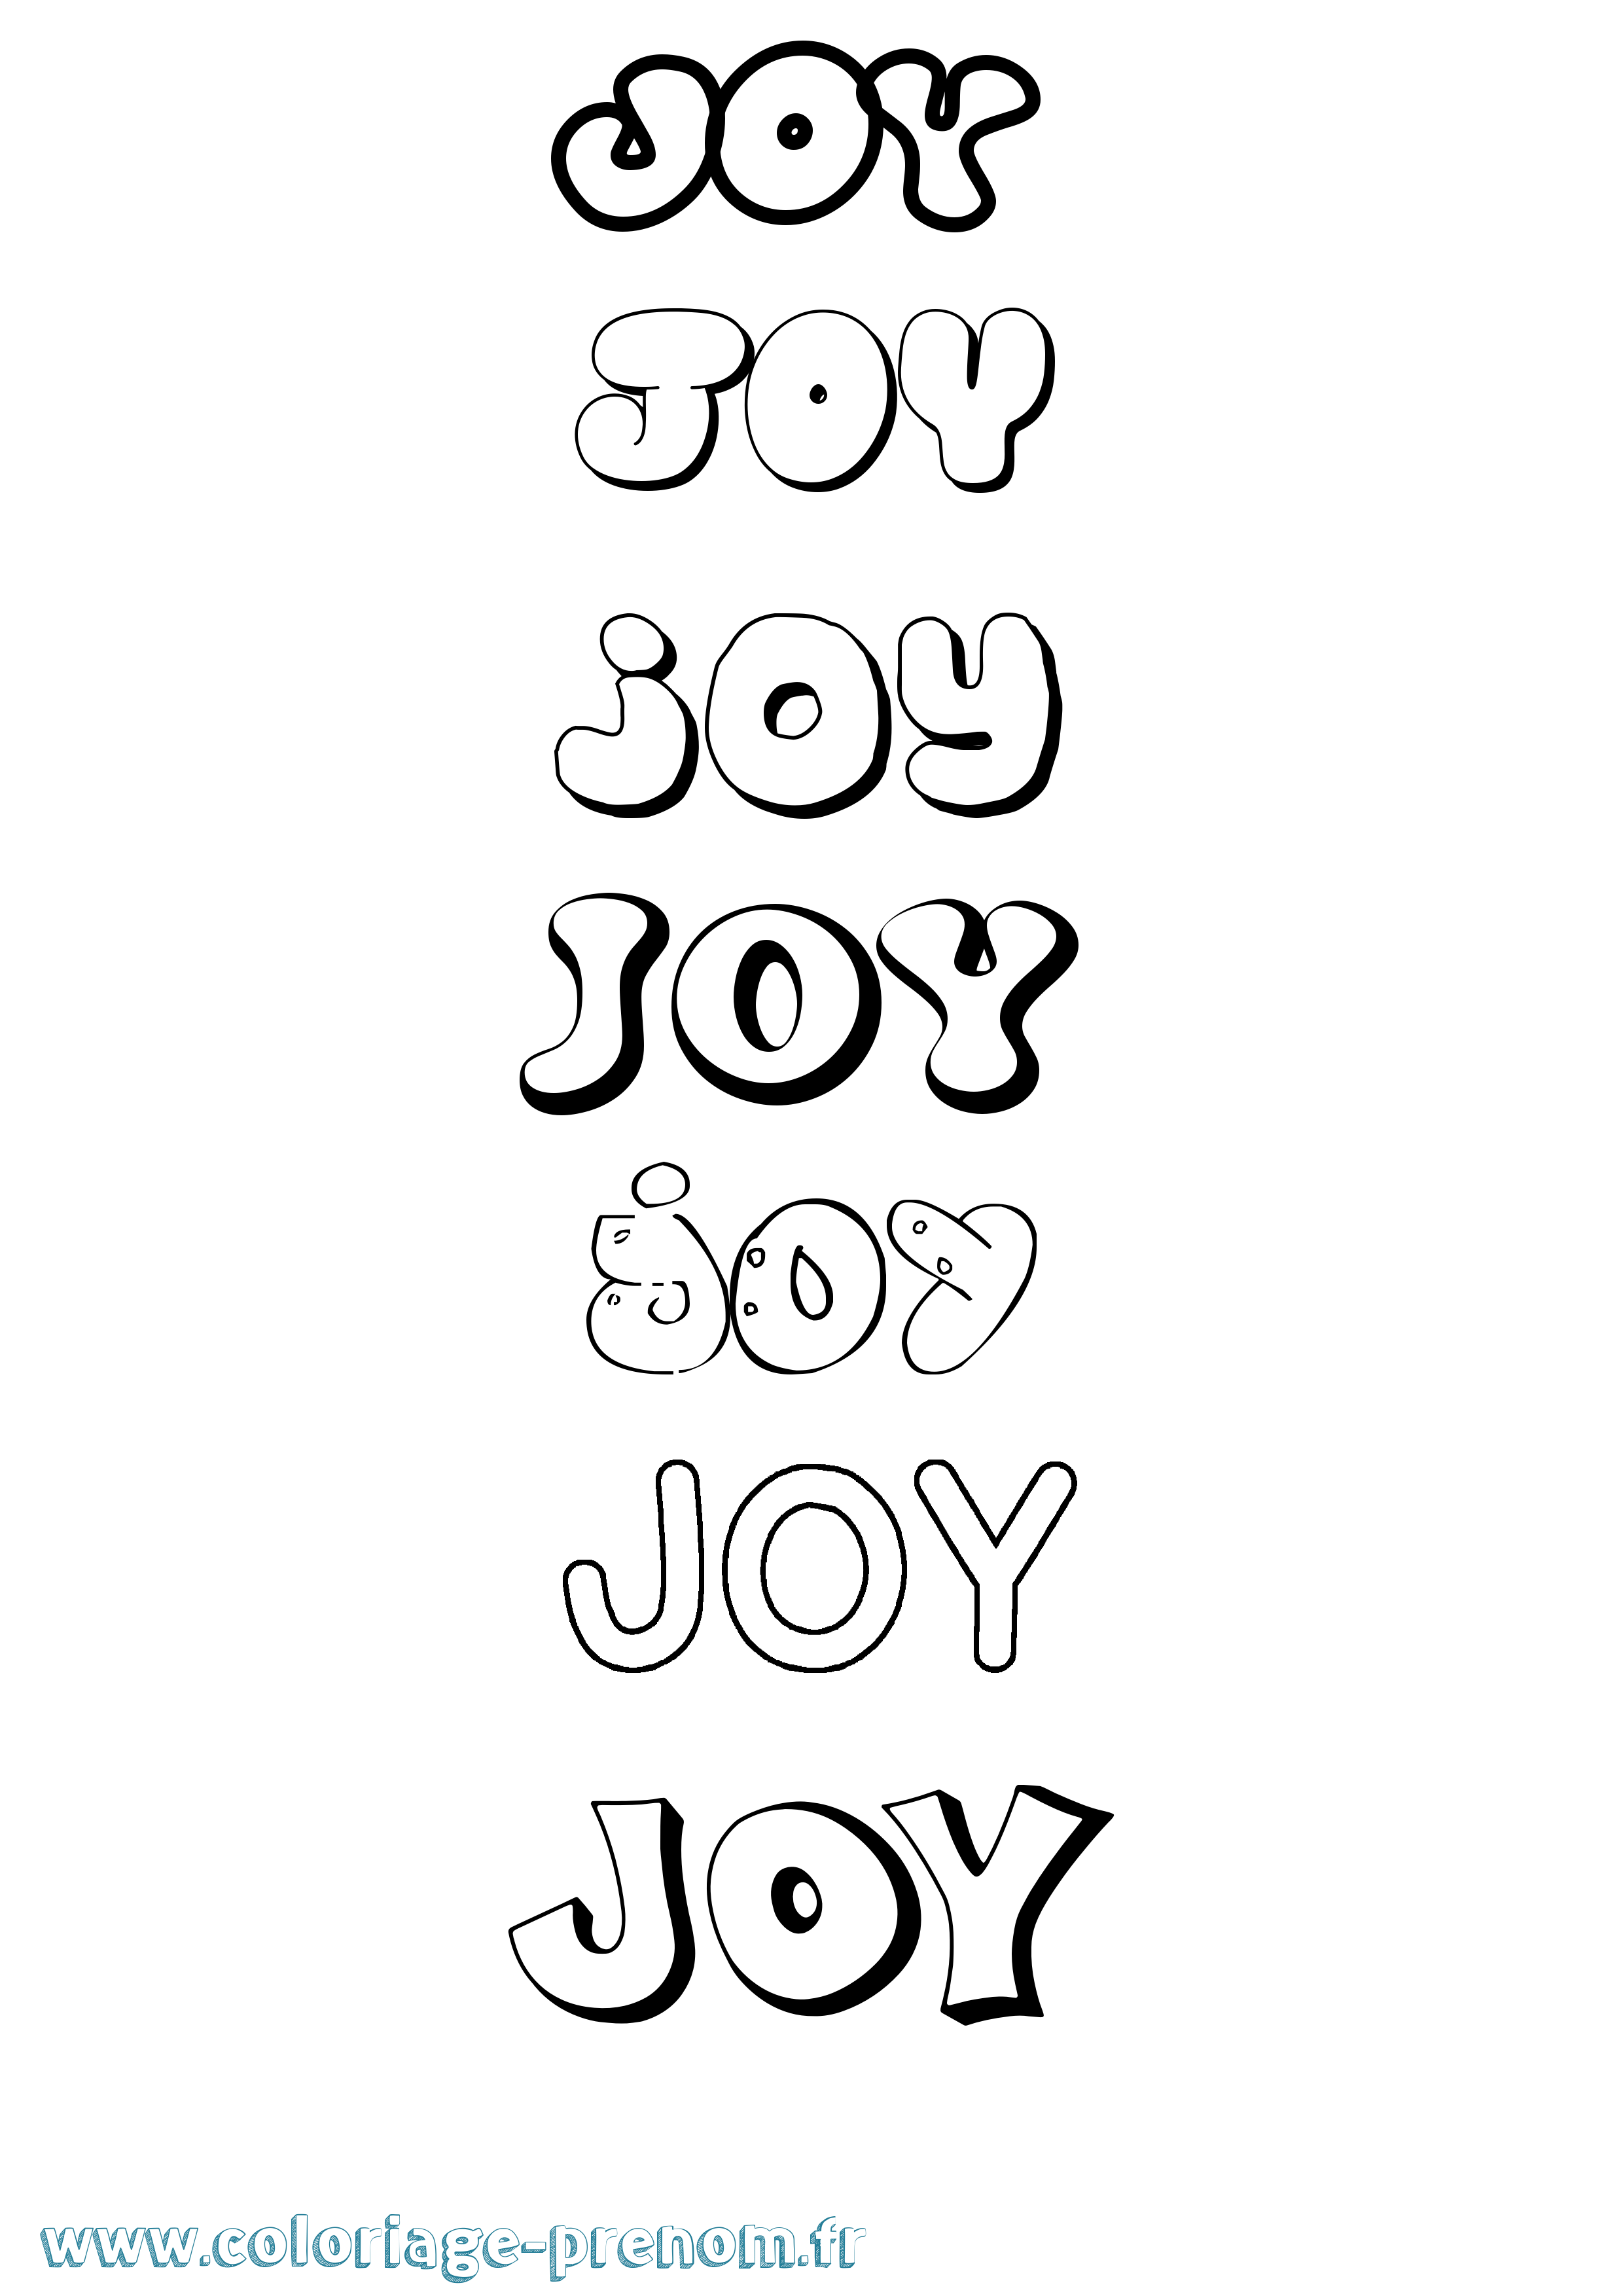 Coloriage prénom Joy